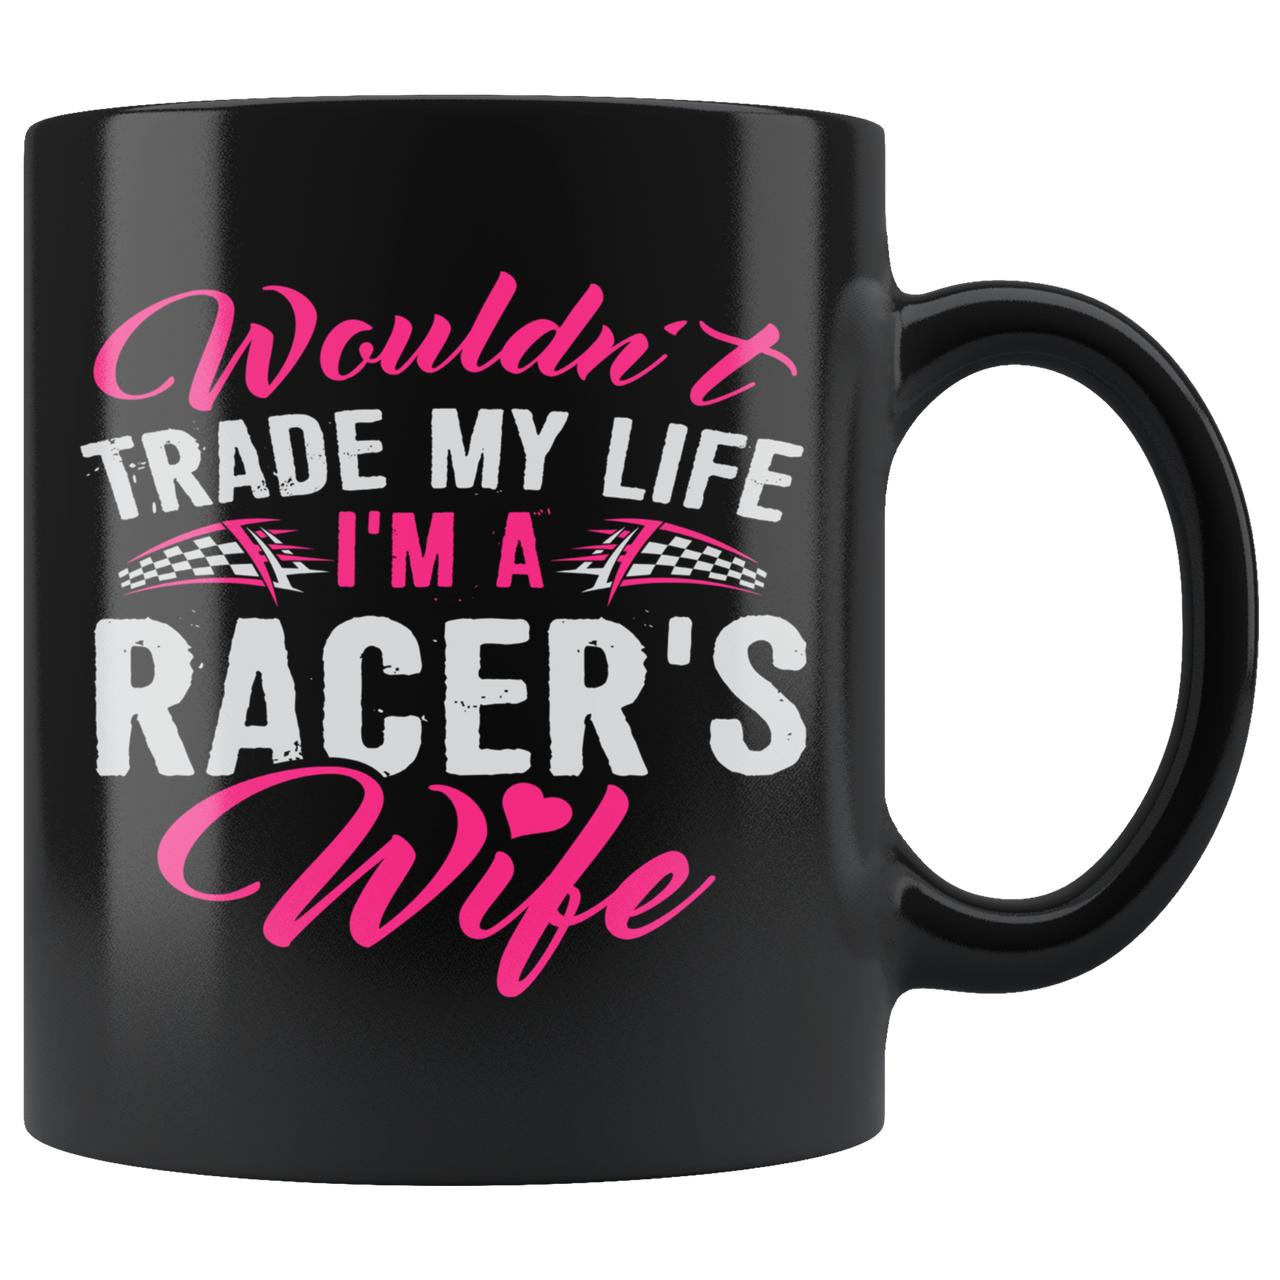 Wouldn't Trade My Life I'm A Racer's Wife Mug!